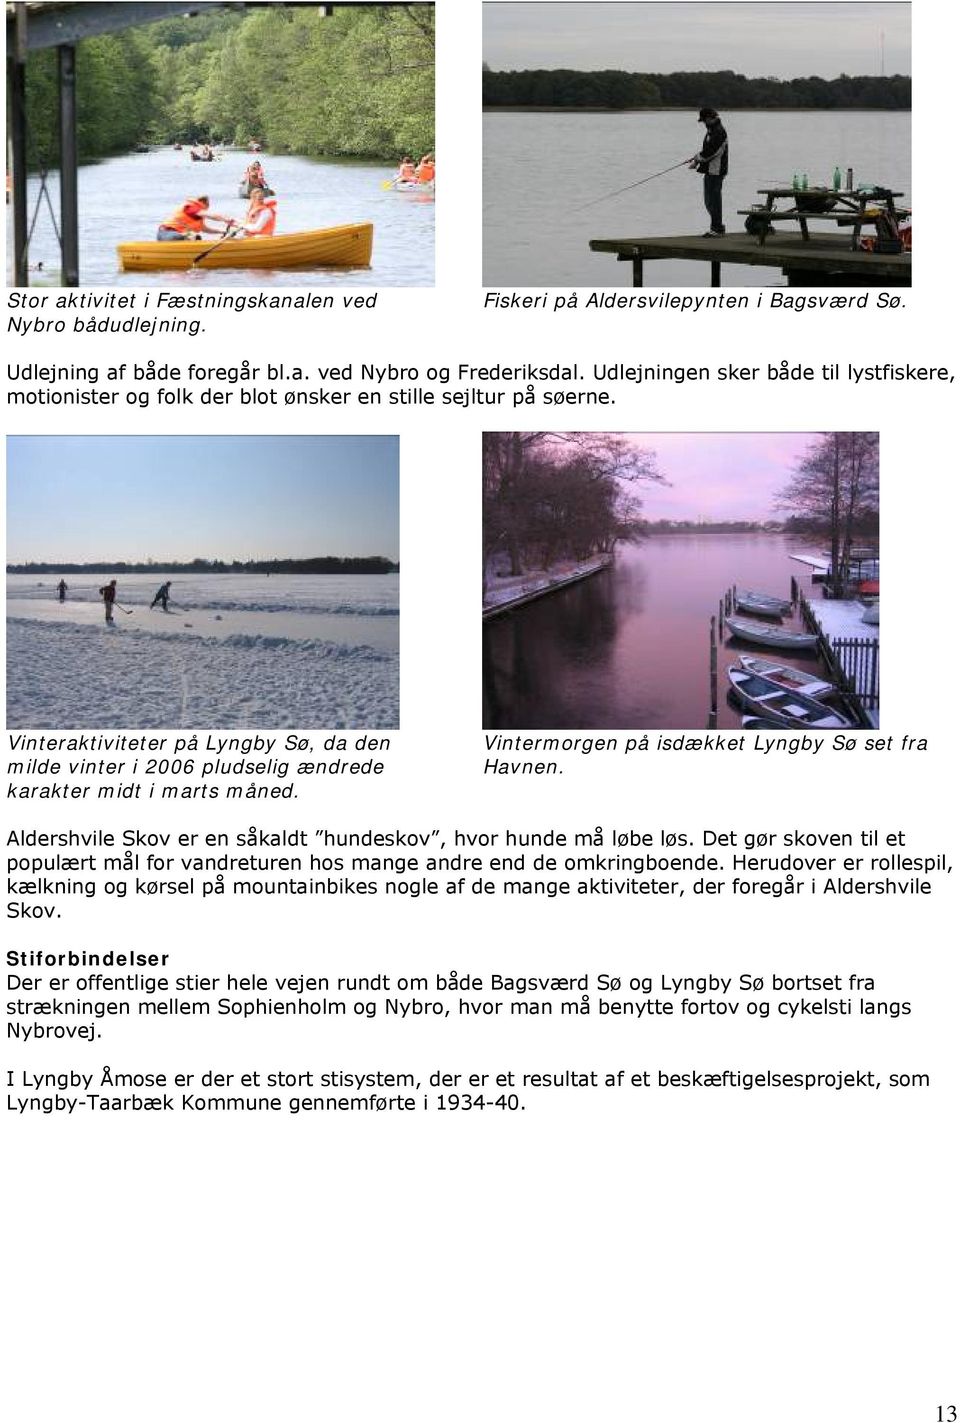 Vinteraktiviteter på Lyngby Sø, da den milde vinter i 2006 pludselig ændrede karakter midt i marts måned. Vintermorgen på isdækket Lyngby Sø set fra Havnen.